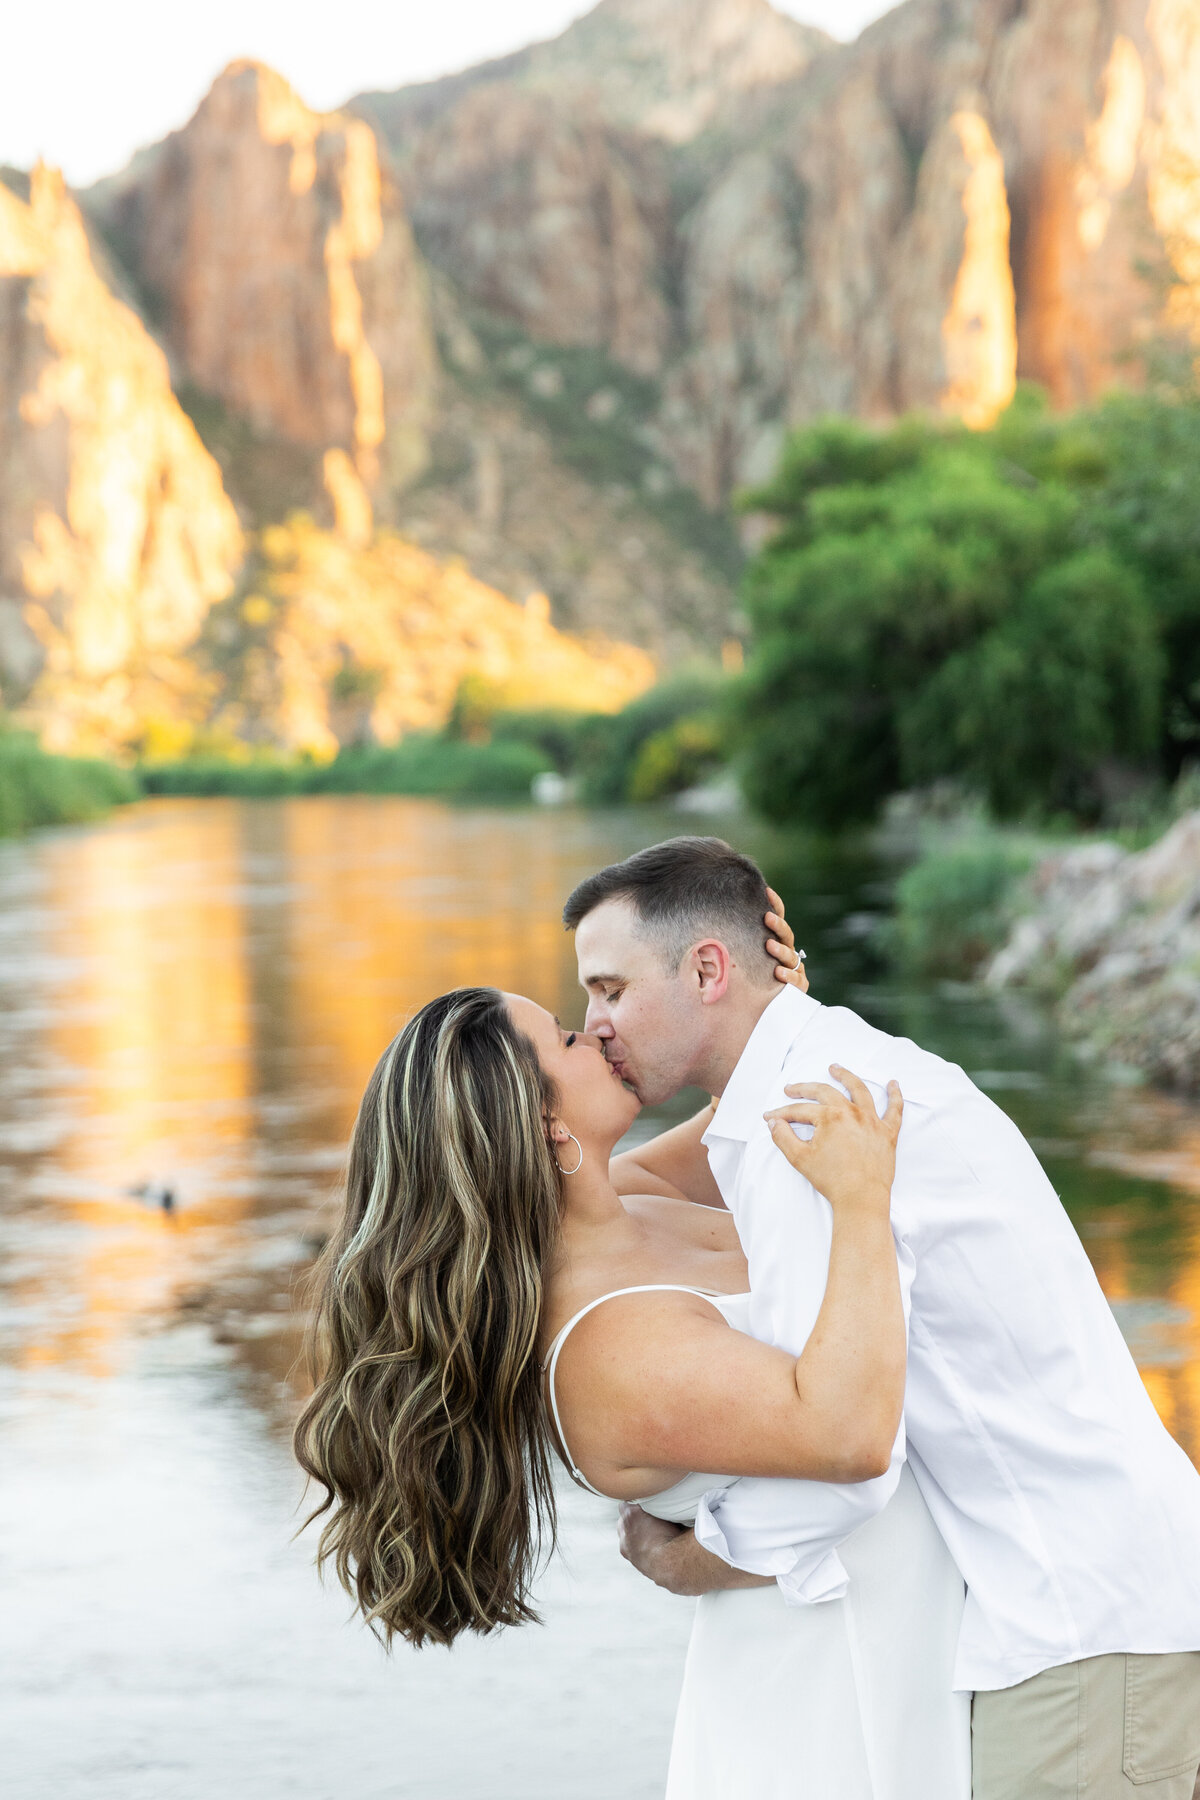 Karlie Colleen Photography - Kaitlyn & Cristian Engagement Session - Salt River Arizona-292